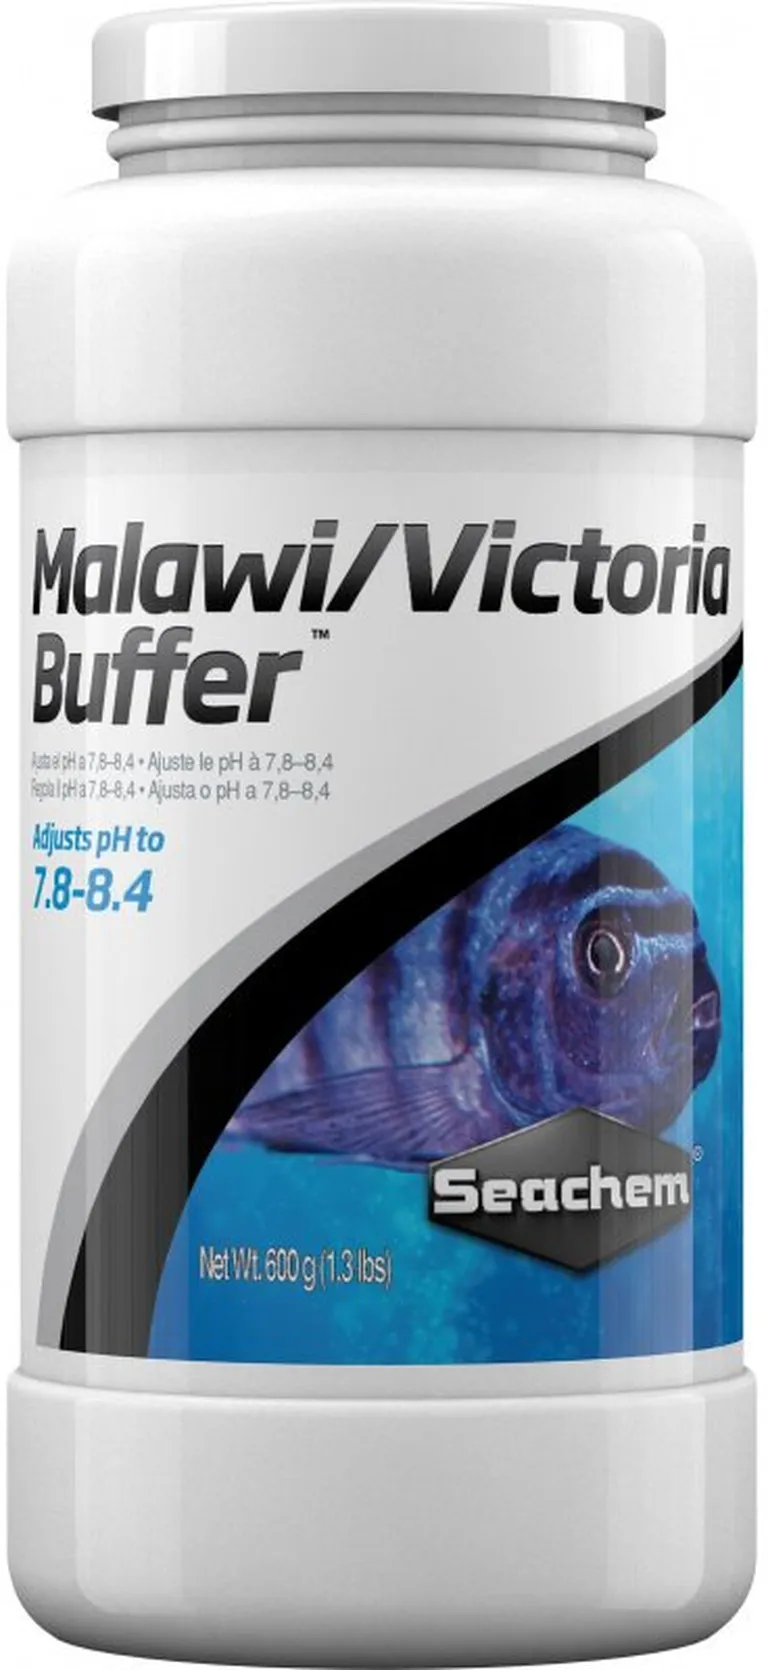 Seachem Malawi Victoria Buffer Photo 2